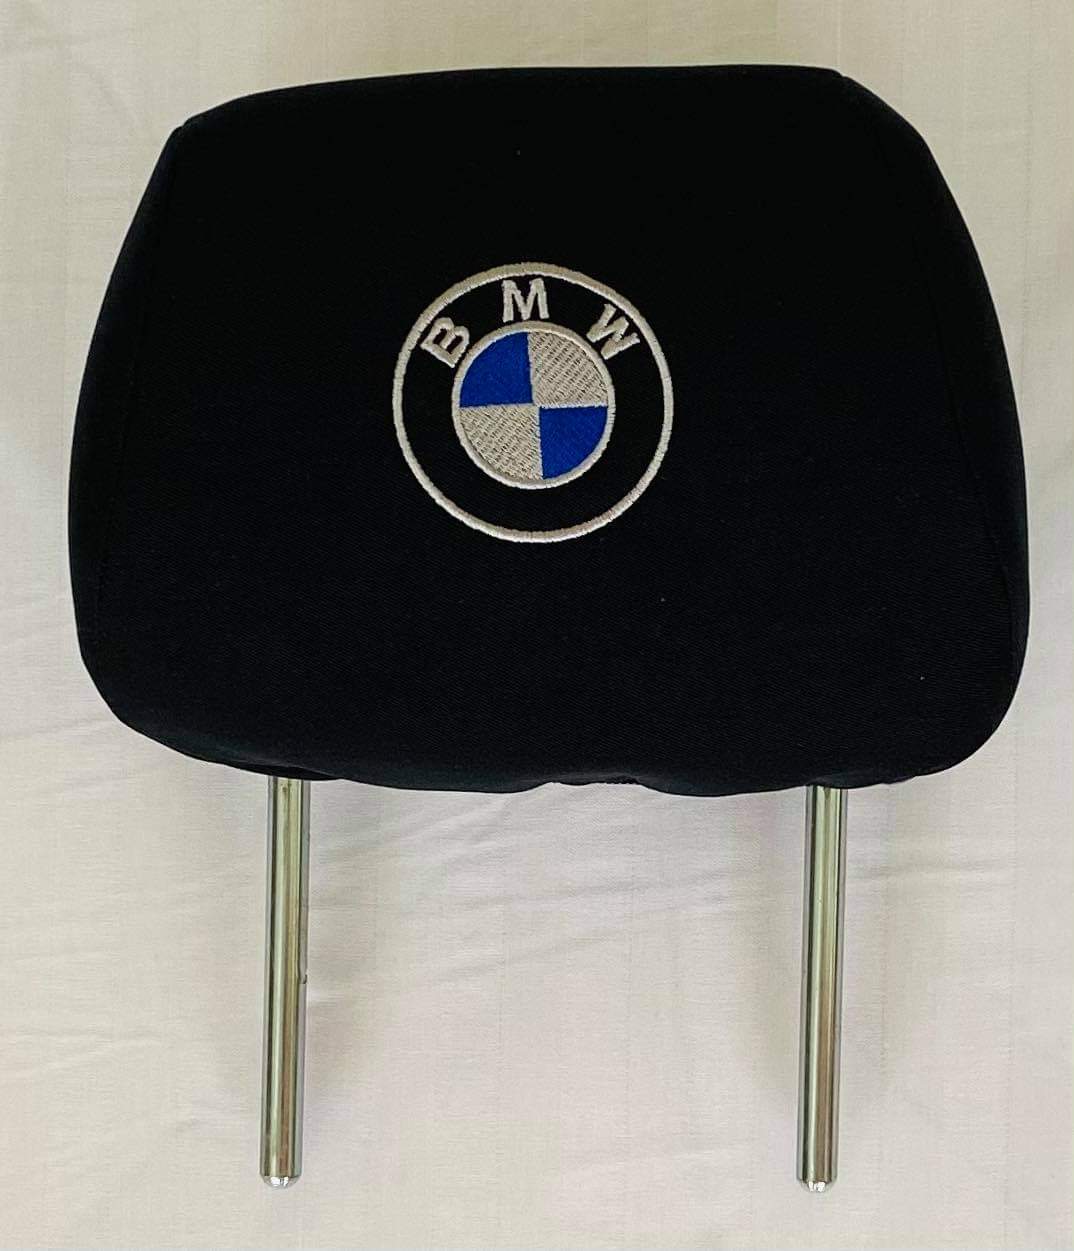 Čierne návleky na opierky hlavy s logom BMW - 2ks